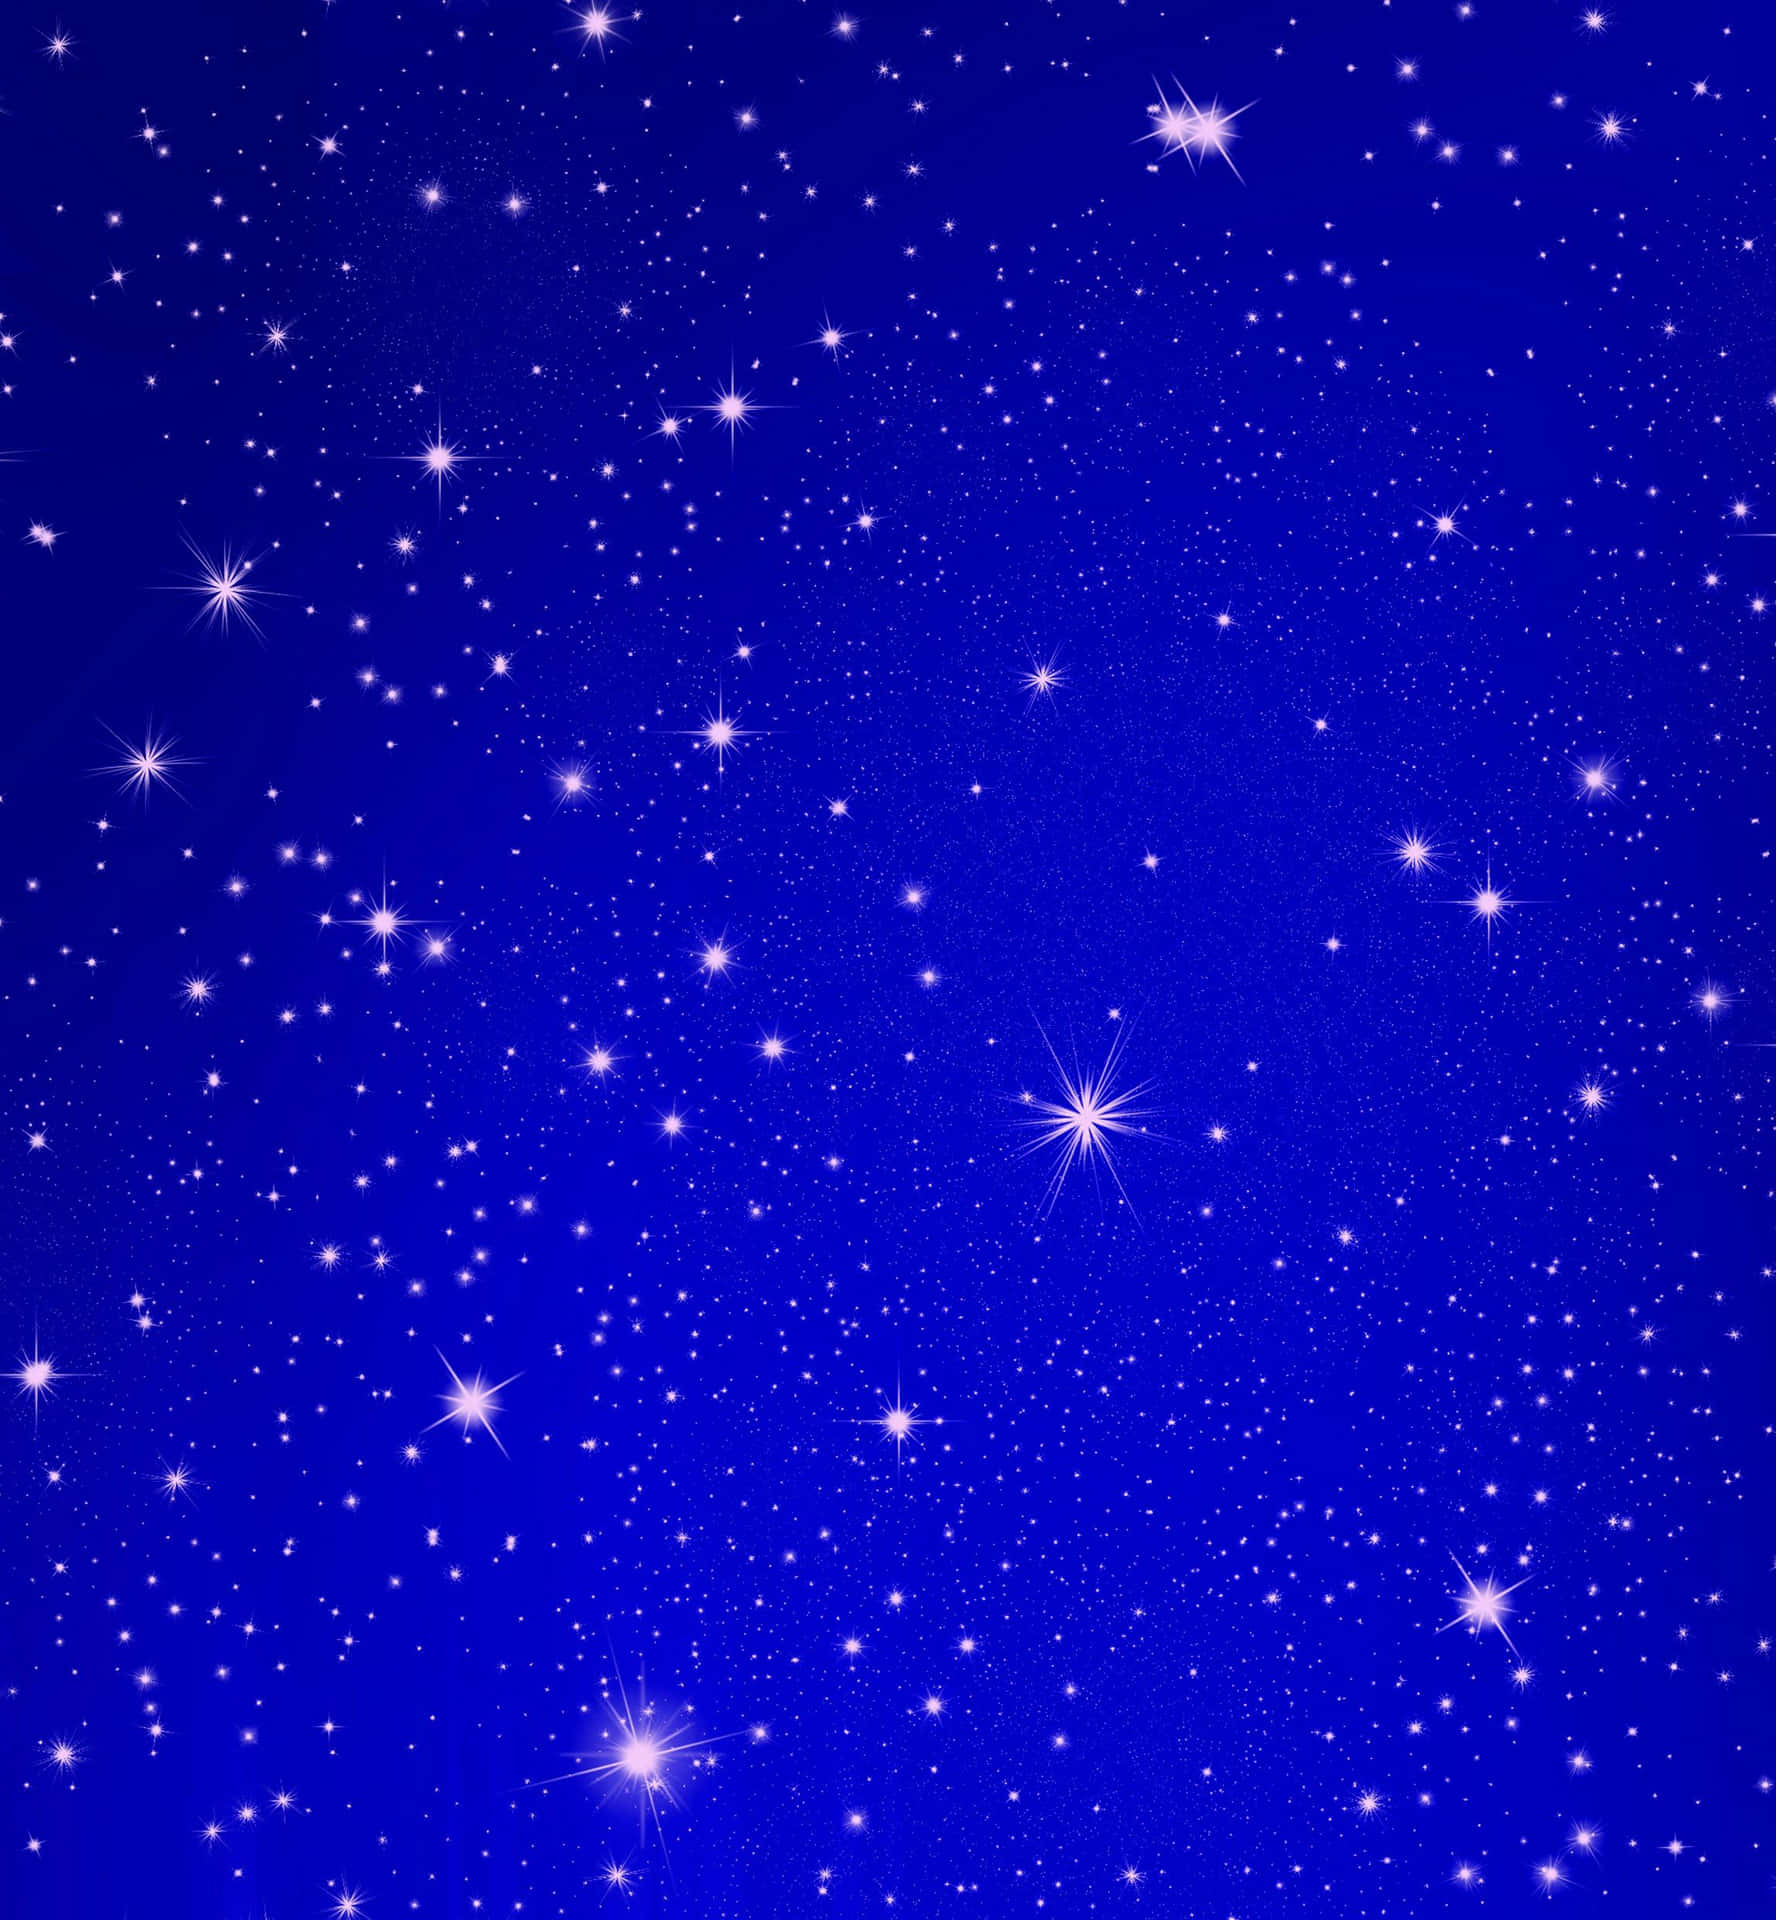 Illuminate the night sky with beautiful blue stars Wallpaper